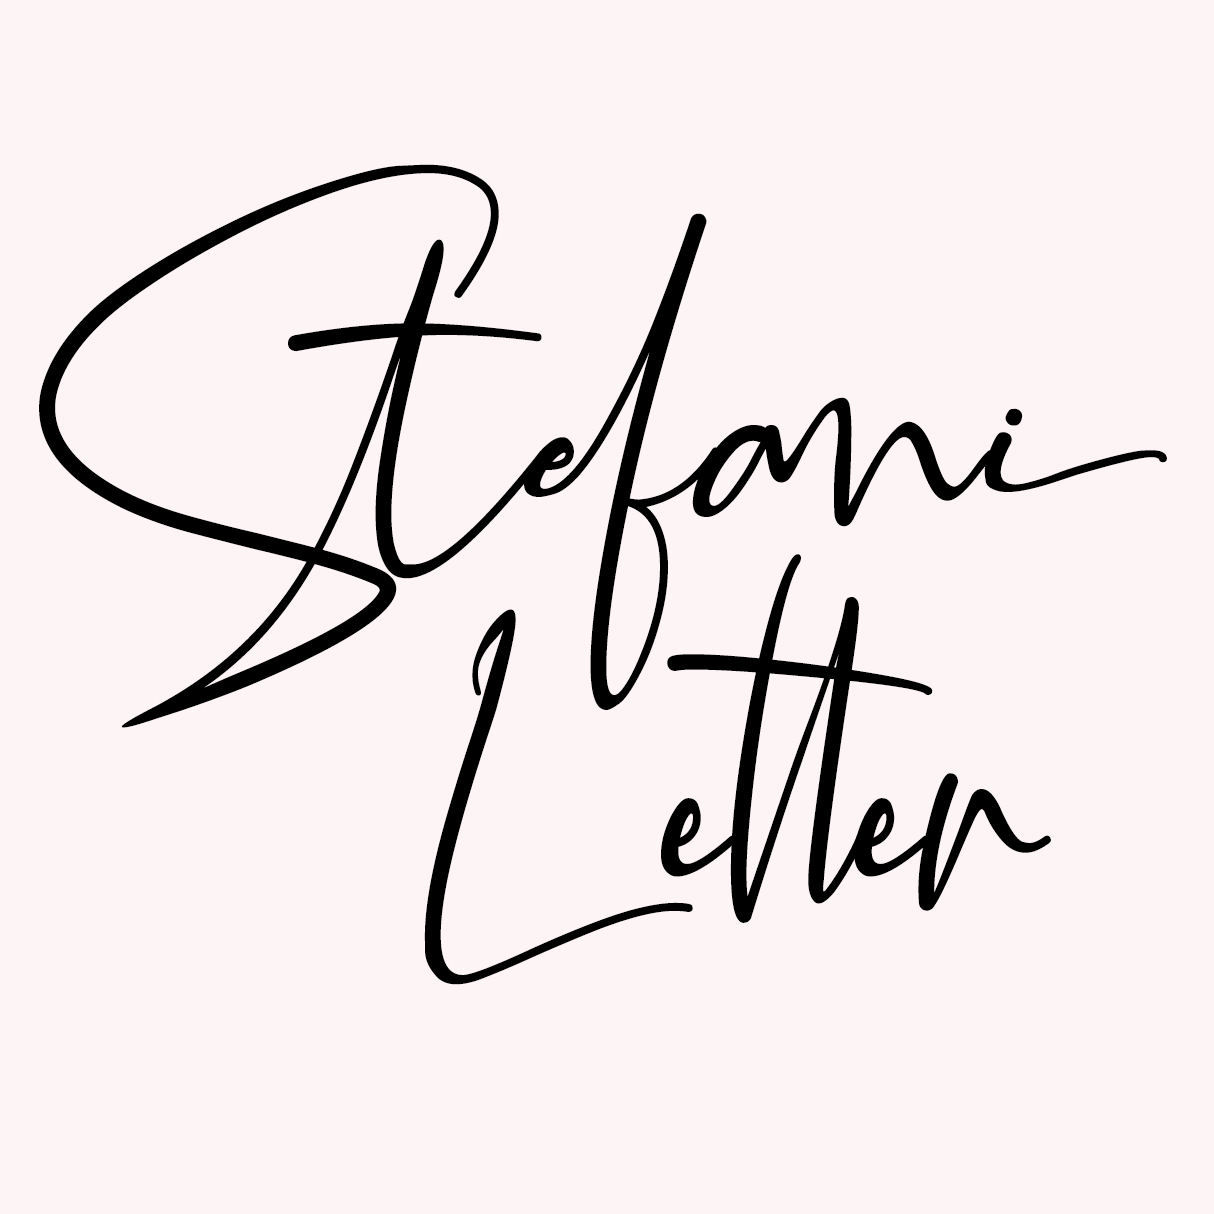 Stefani Letter's profile picture